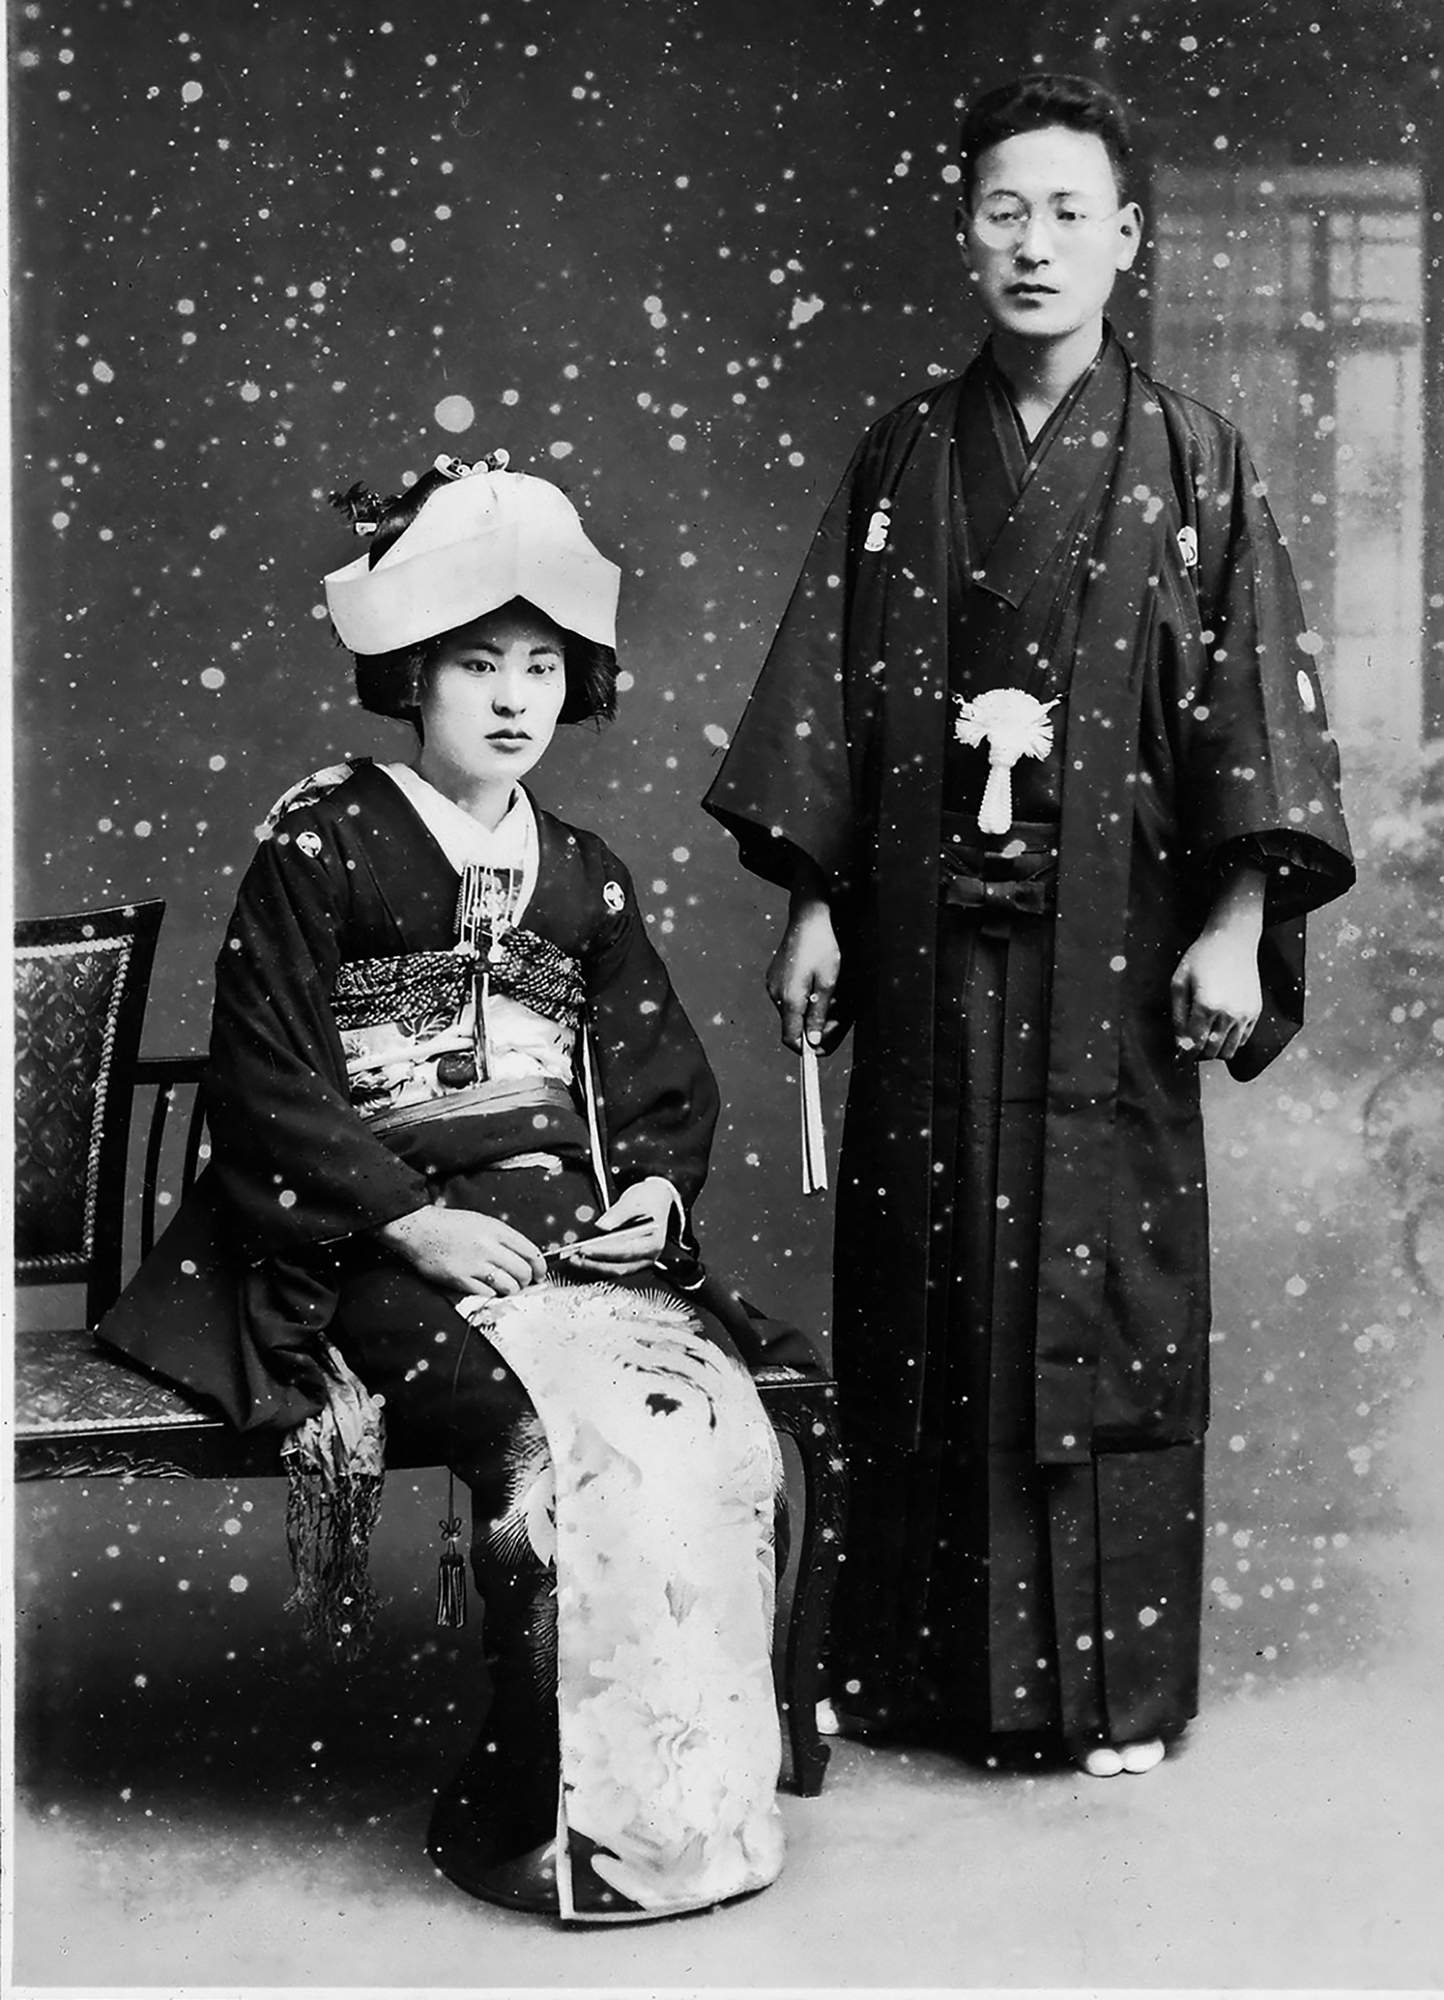 DISQUIET_WeddingPhoto_Japan1930s_2022_ArchivalPigmentPrintOnKozoPaper_6.25x4.75in